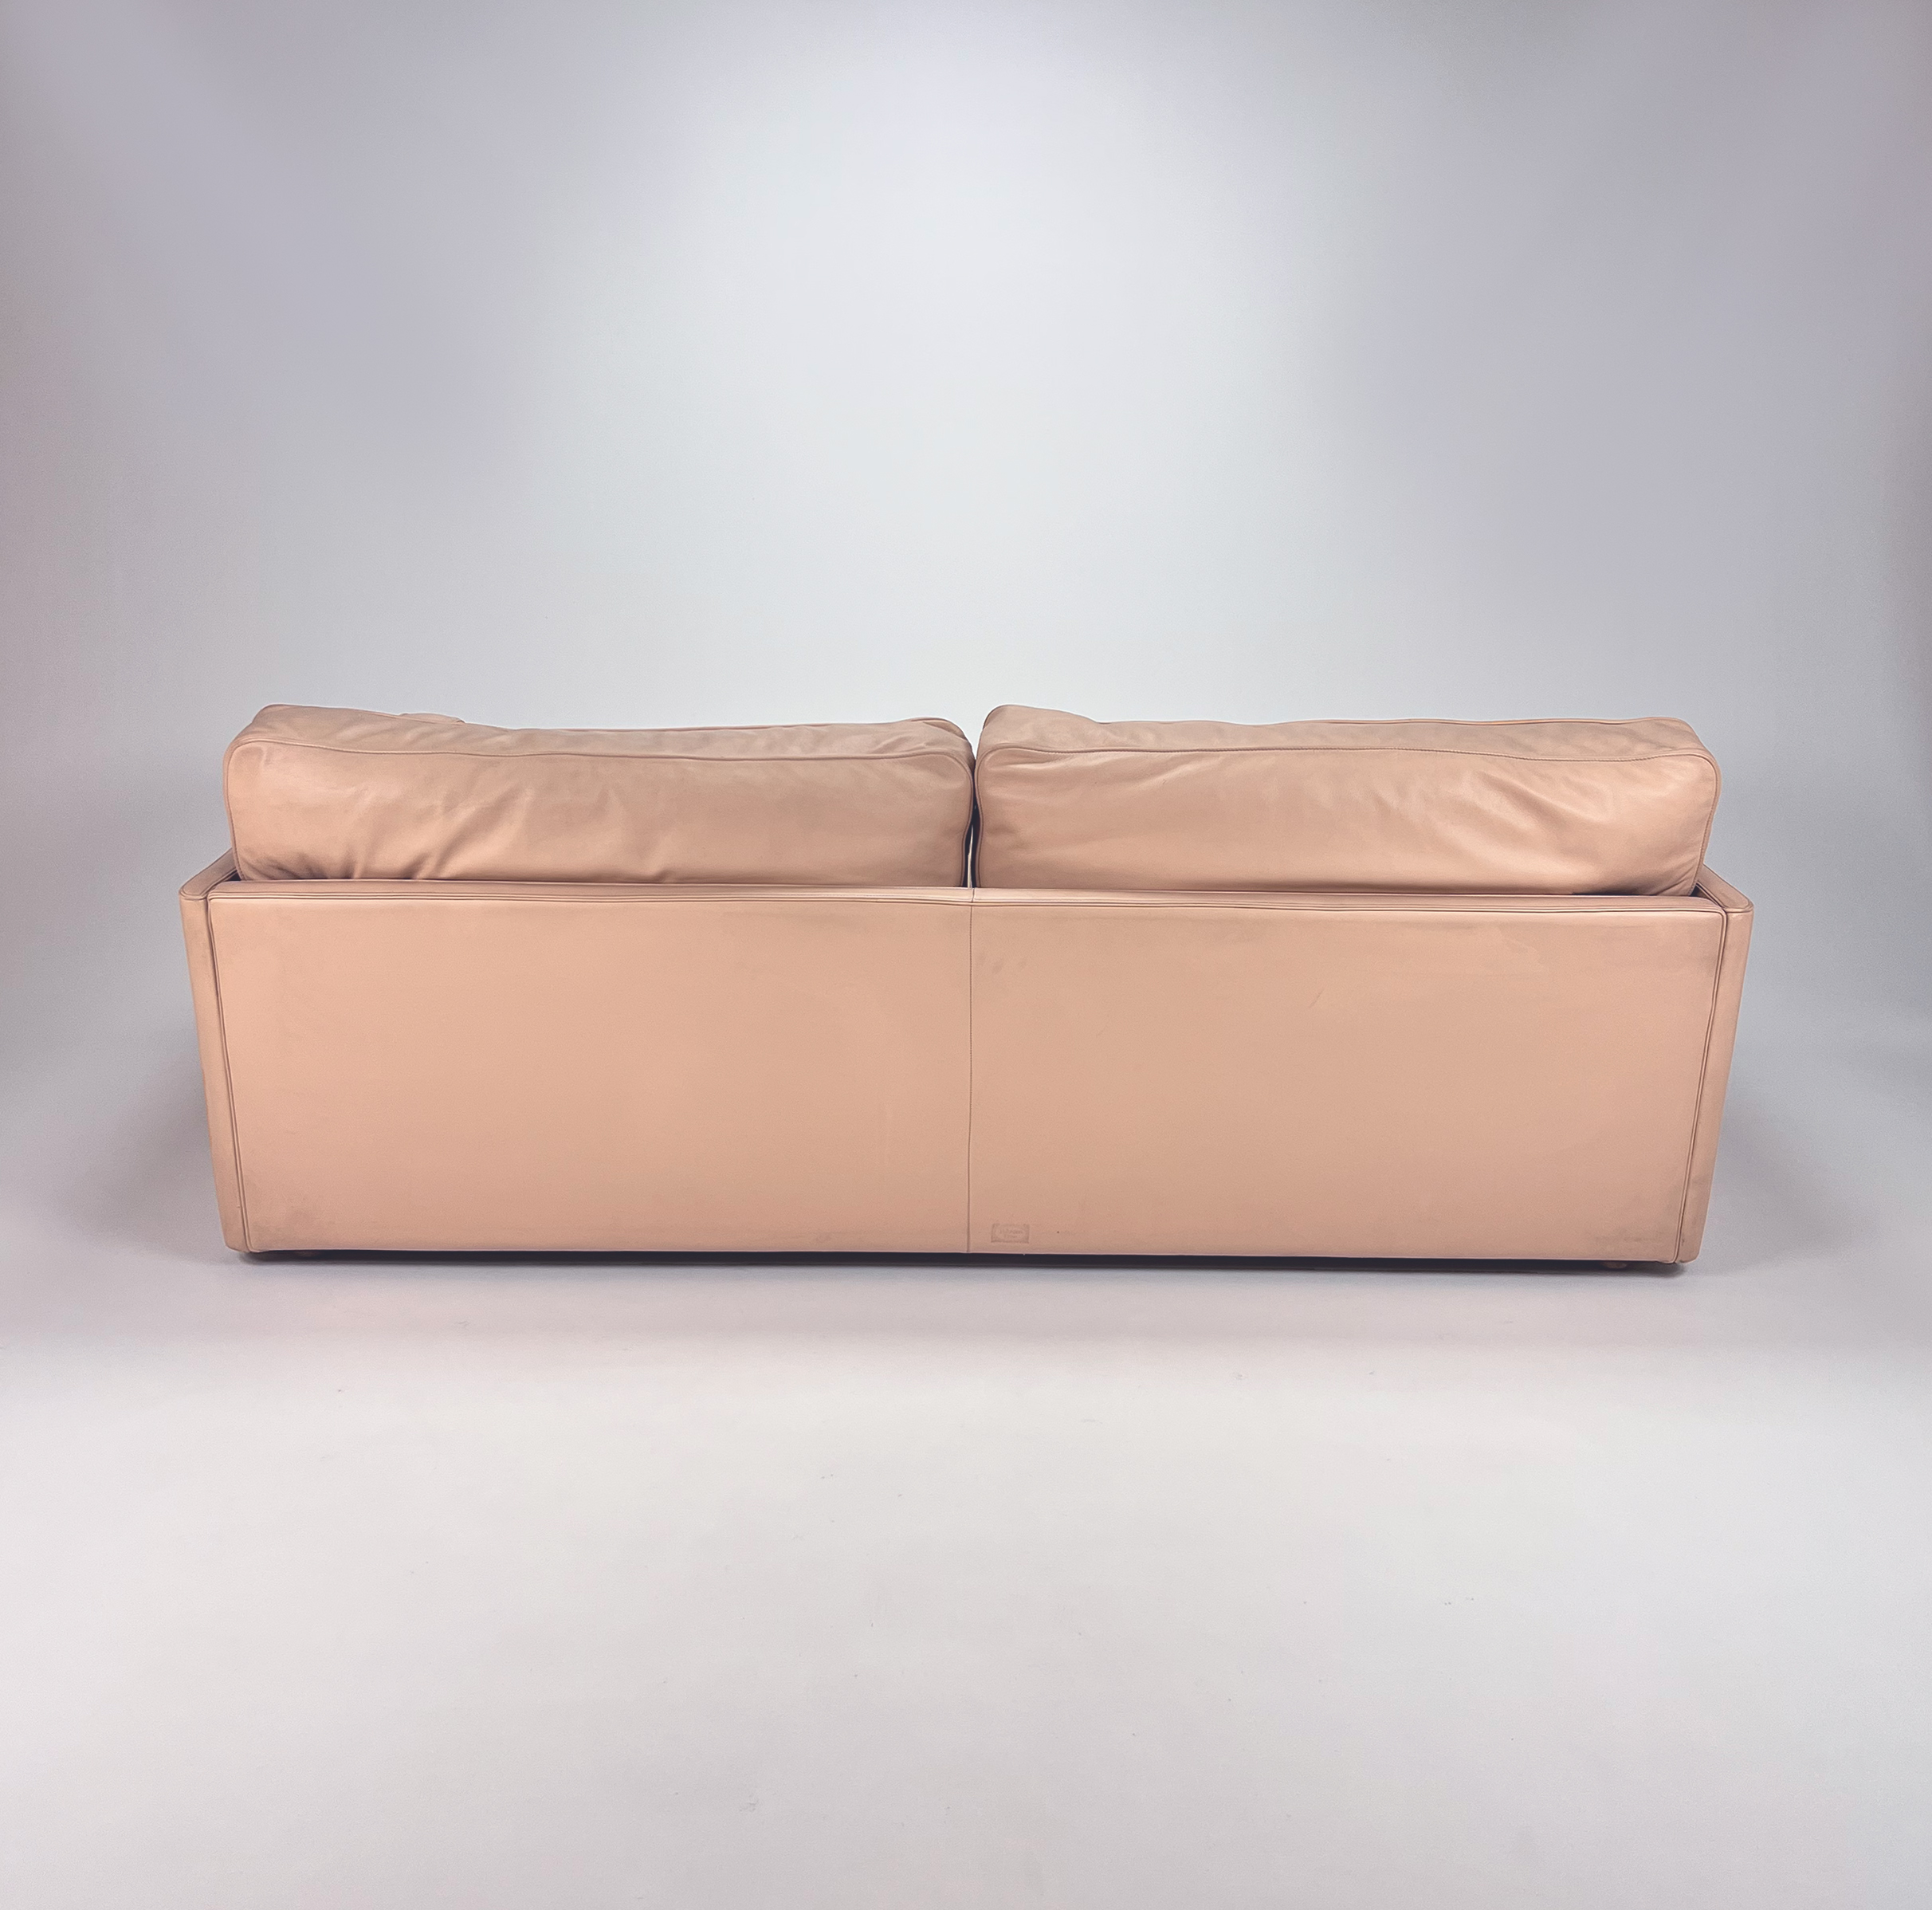 Two-seater sofa by Pierluigi Cerri for Poltrona Frau, 1996